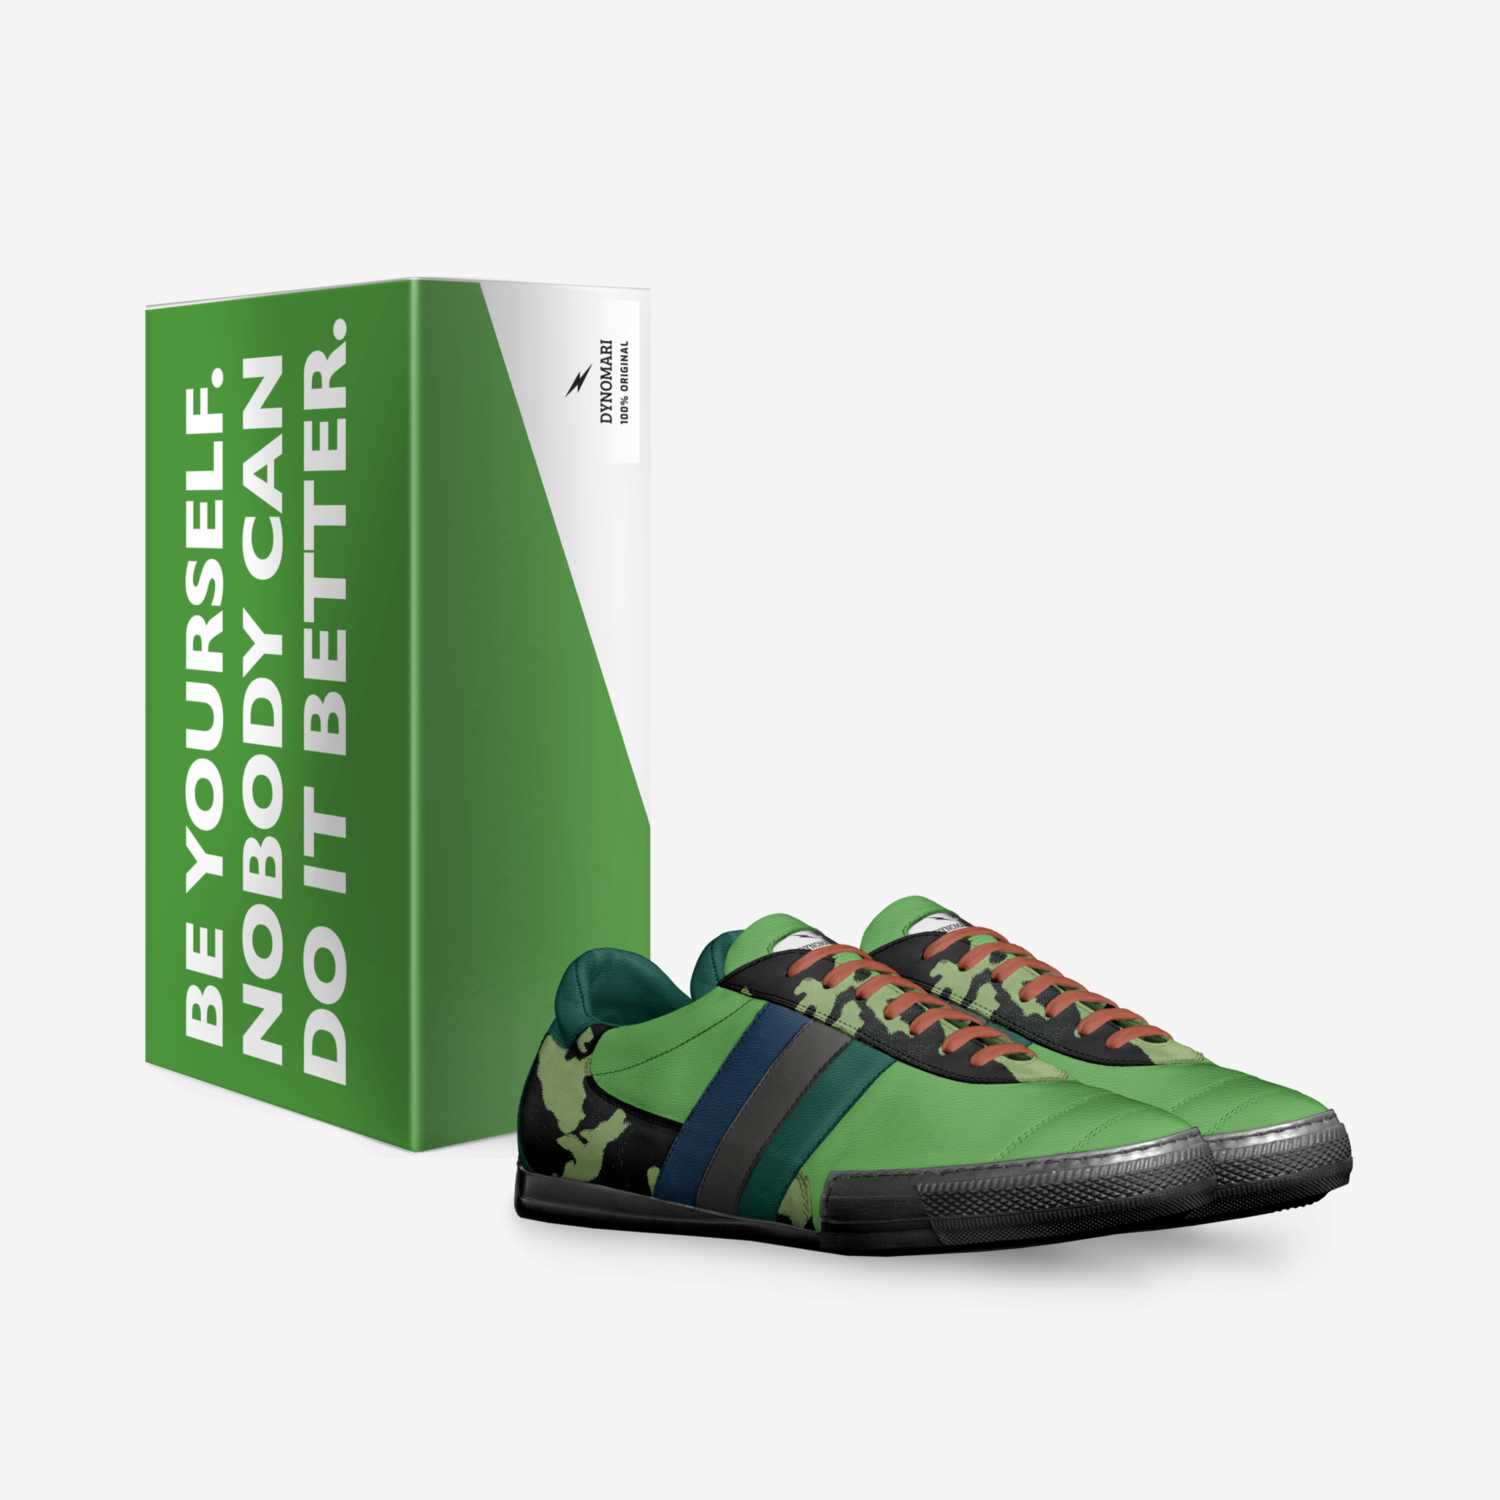 Dinomari custom made in Italy shoes by Randrick Chance | Box view